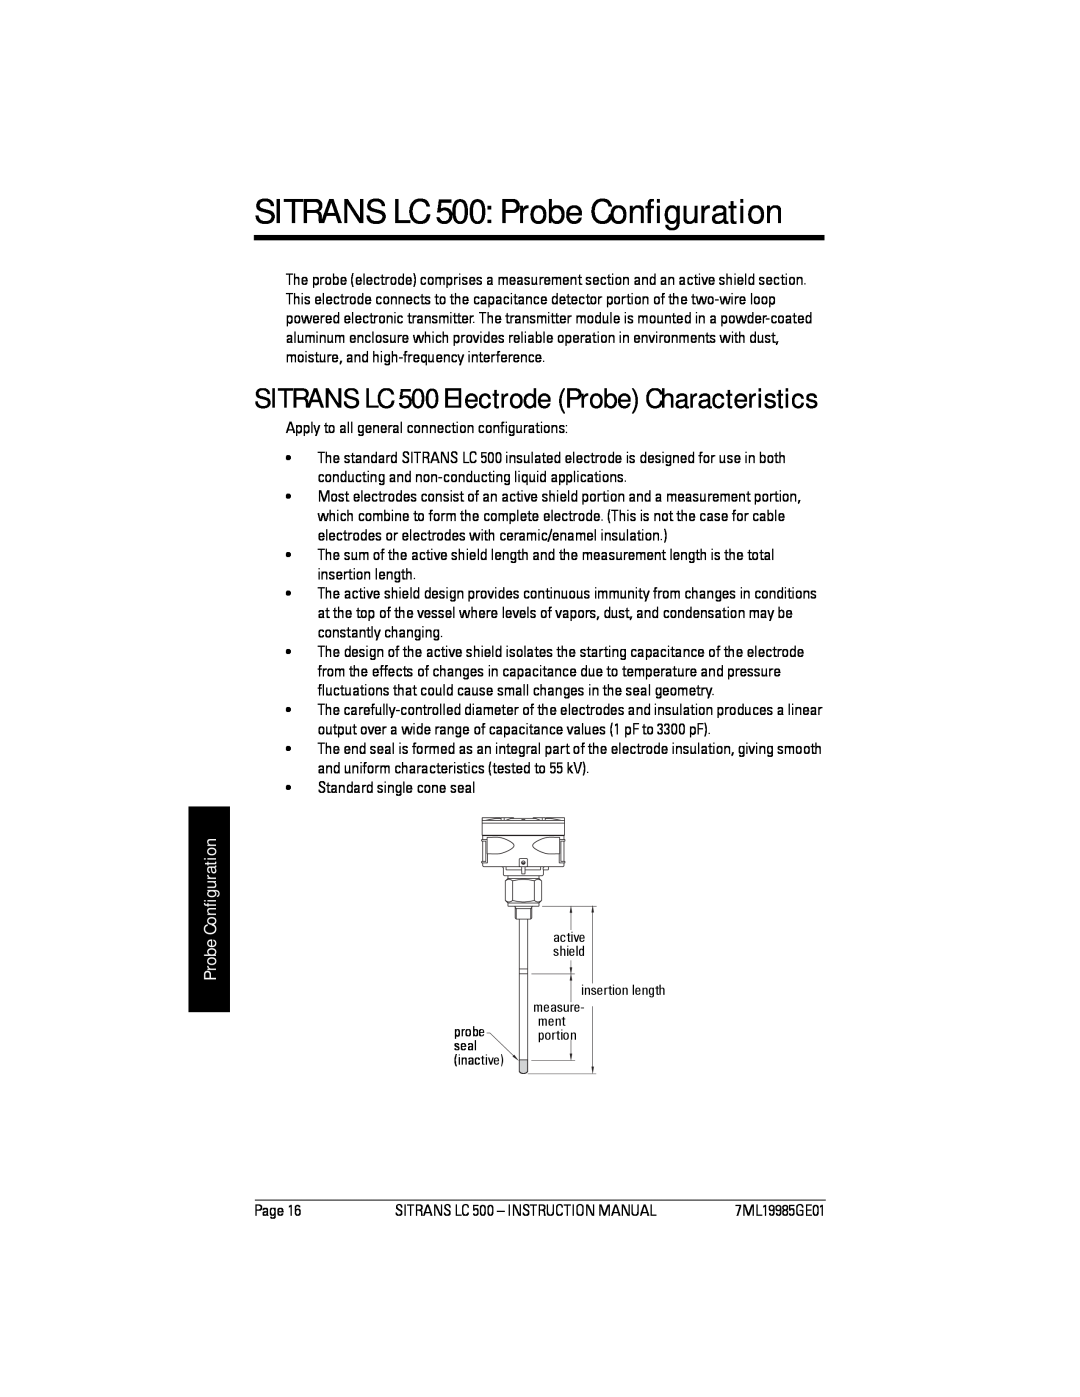 Siemens Sitrans instruction manual SITRANS LC 500 Probe Configuration, SITRANS LC 500 Electrode Probe Characteristics 